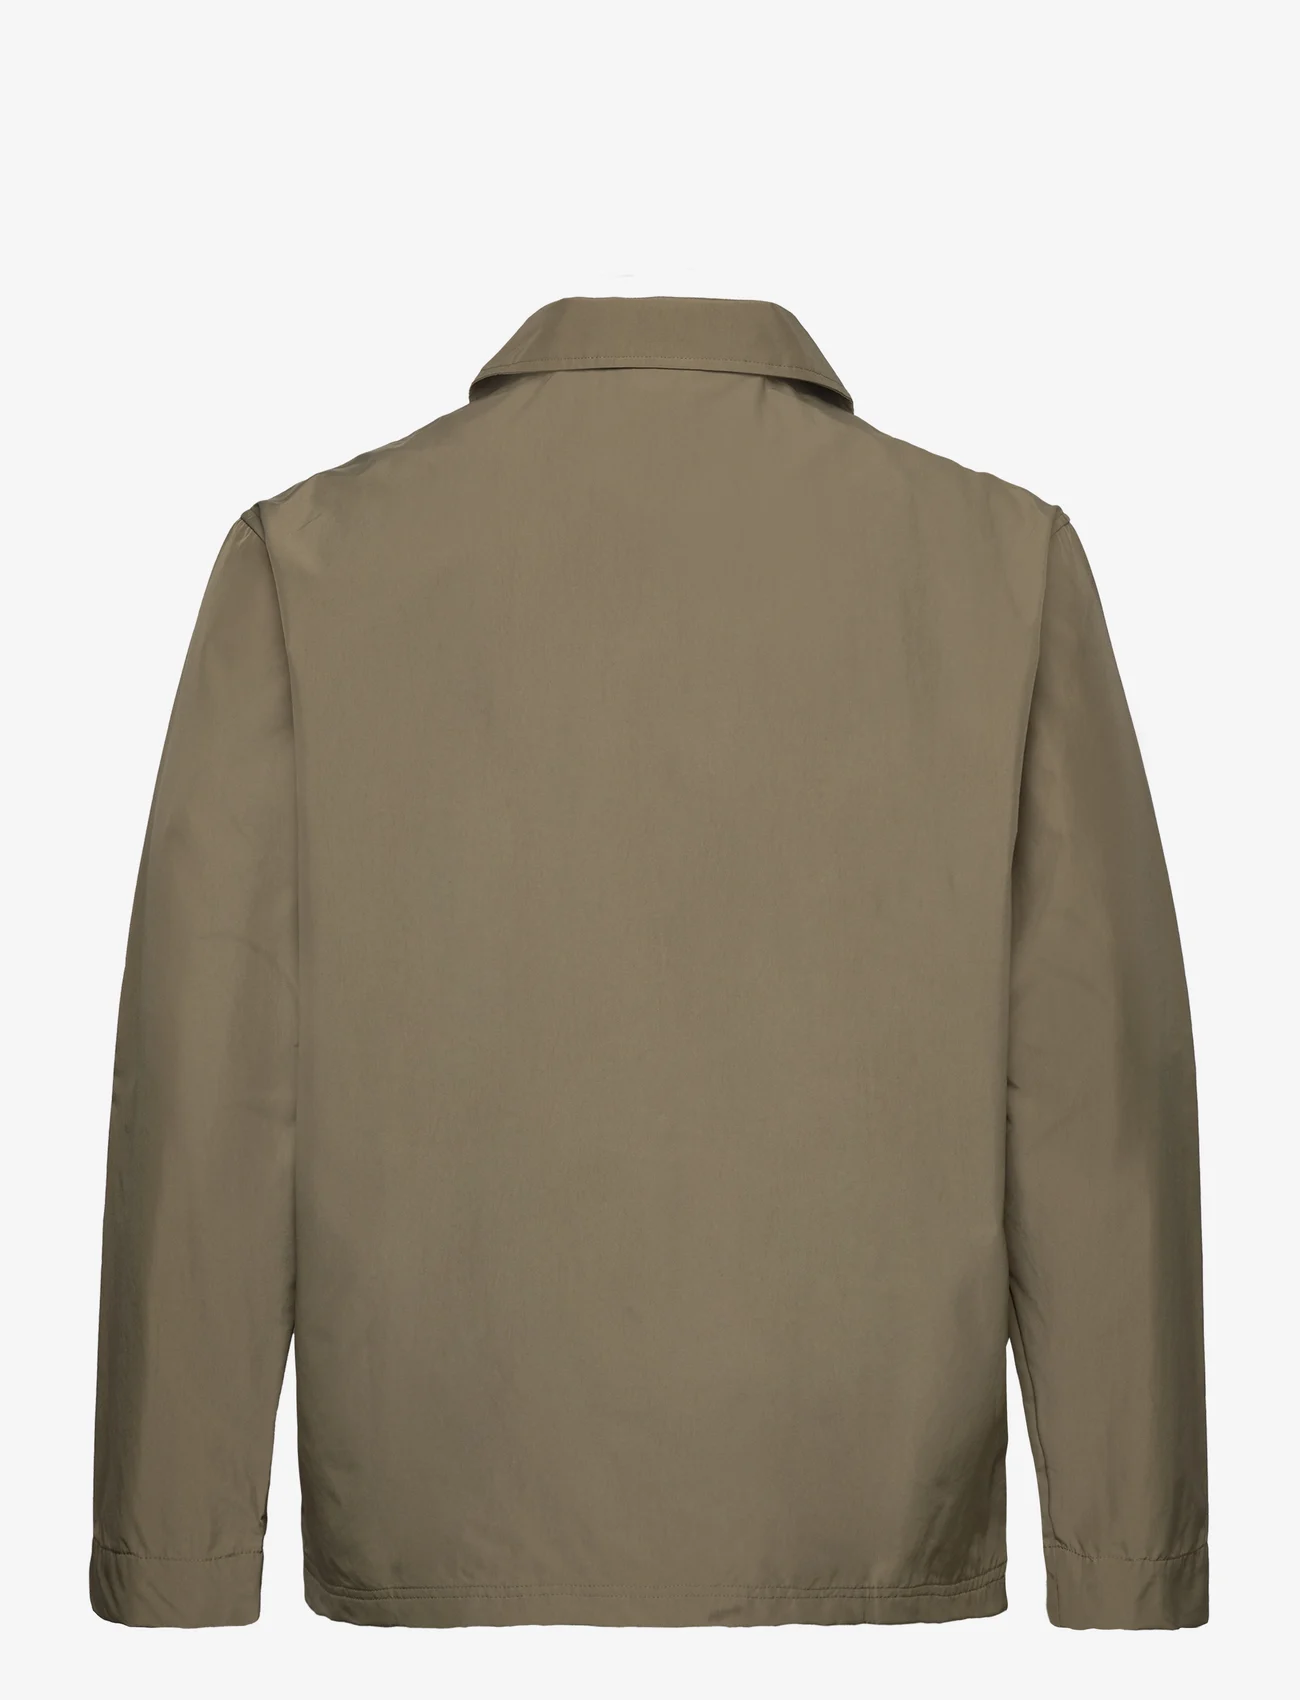 New Balance - Essentials Reimagined Woven Jacket - kurtki sportowe - covert green - 1